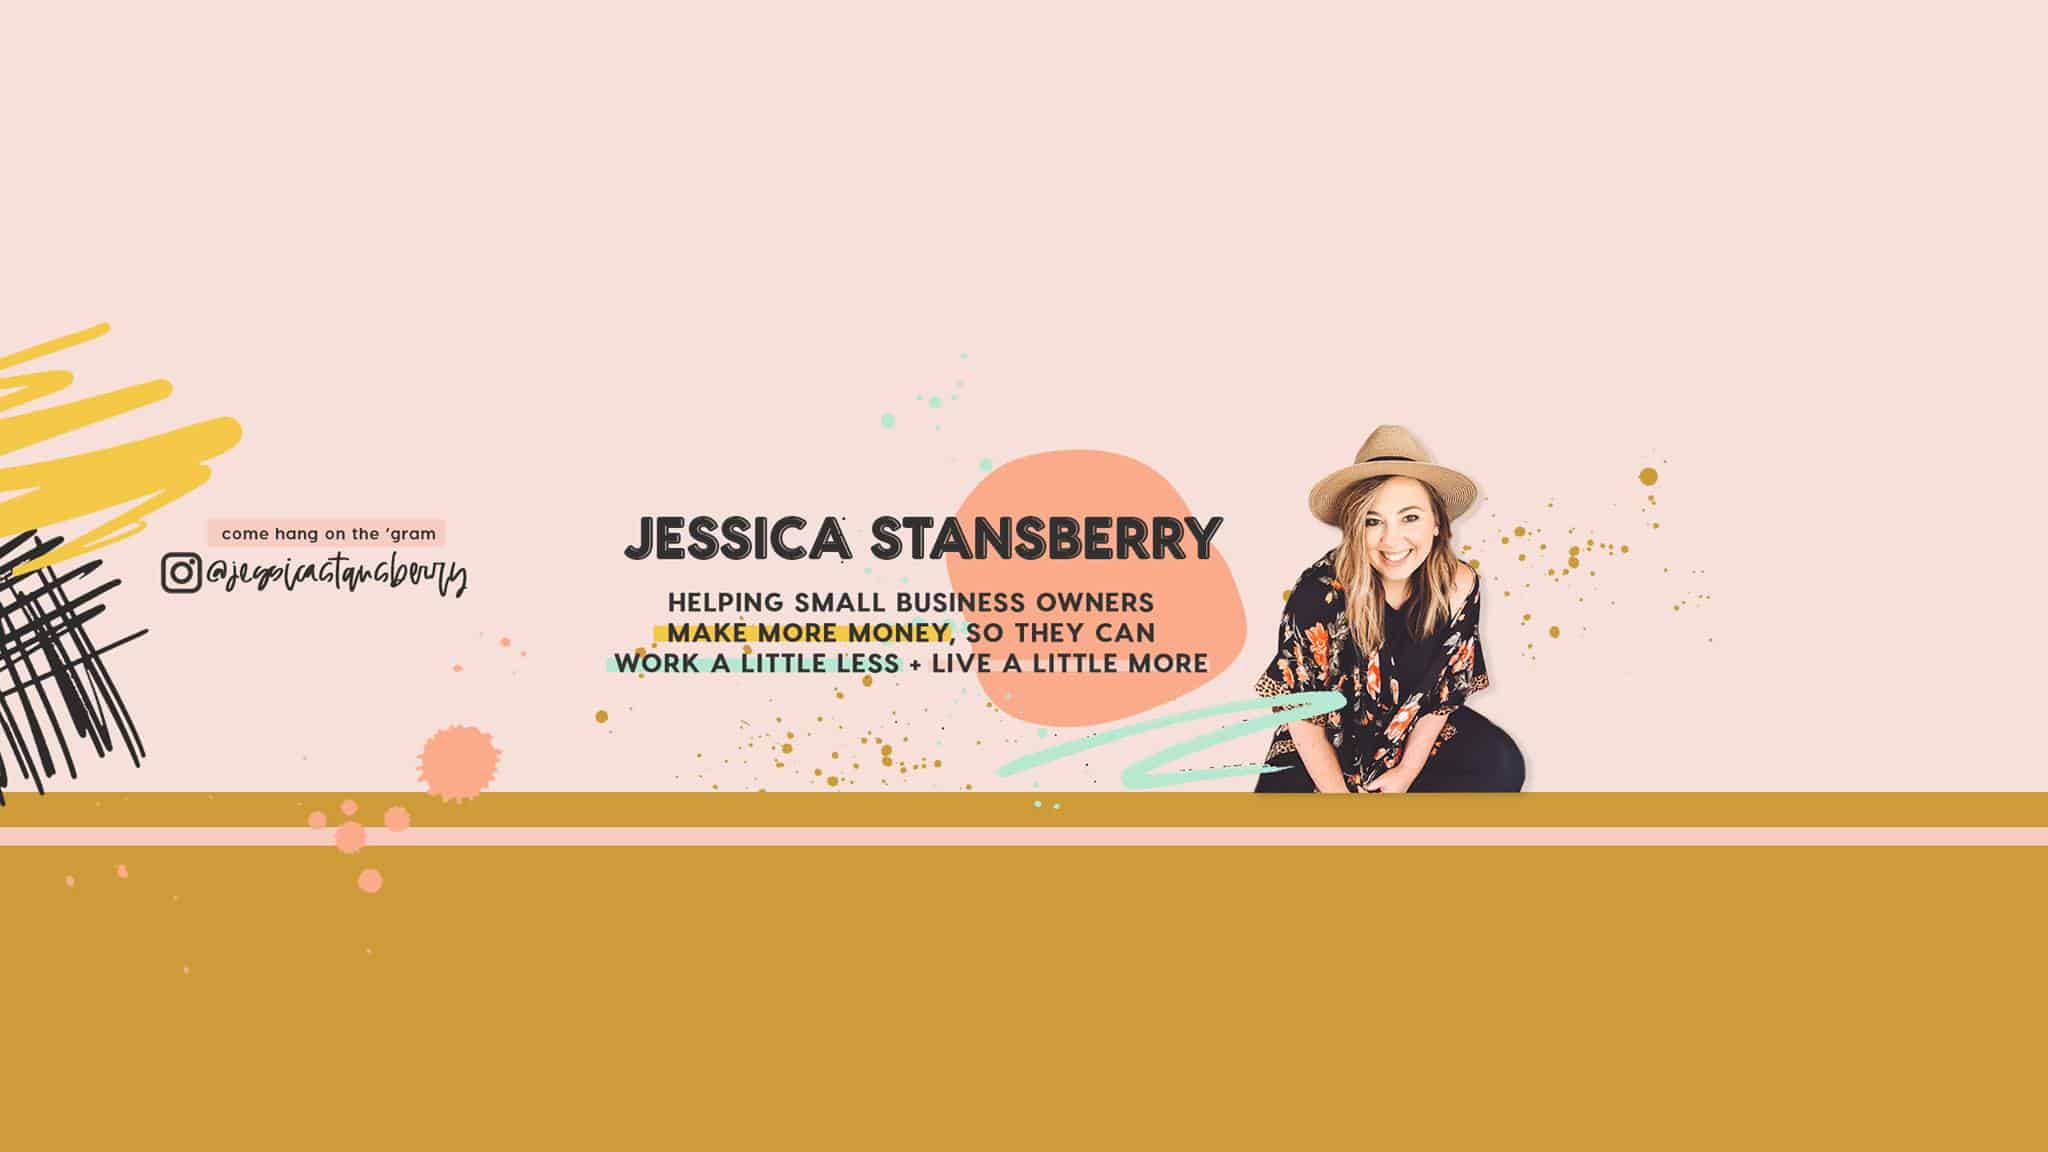 Jessica Stansberry